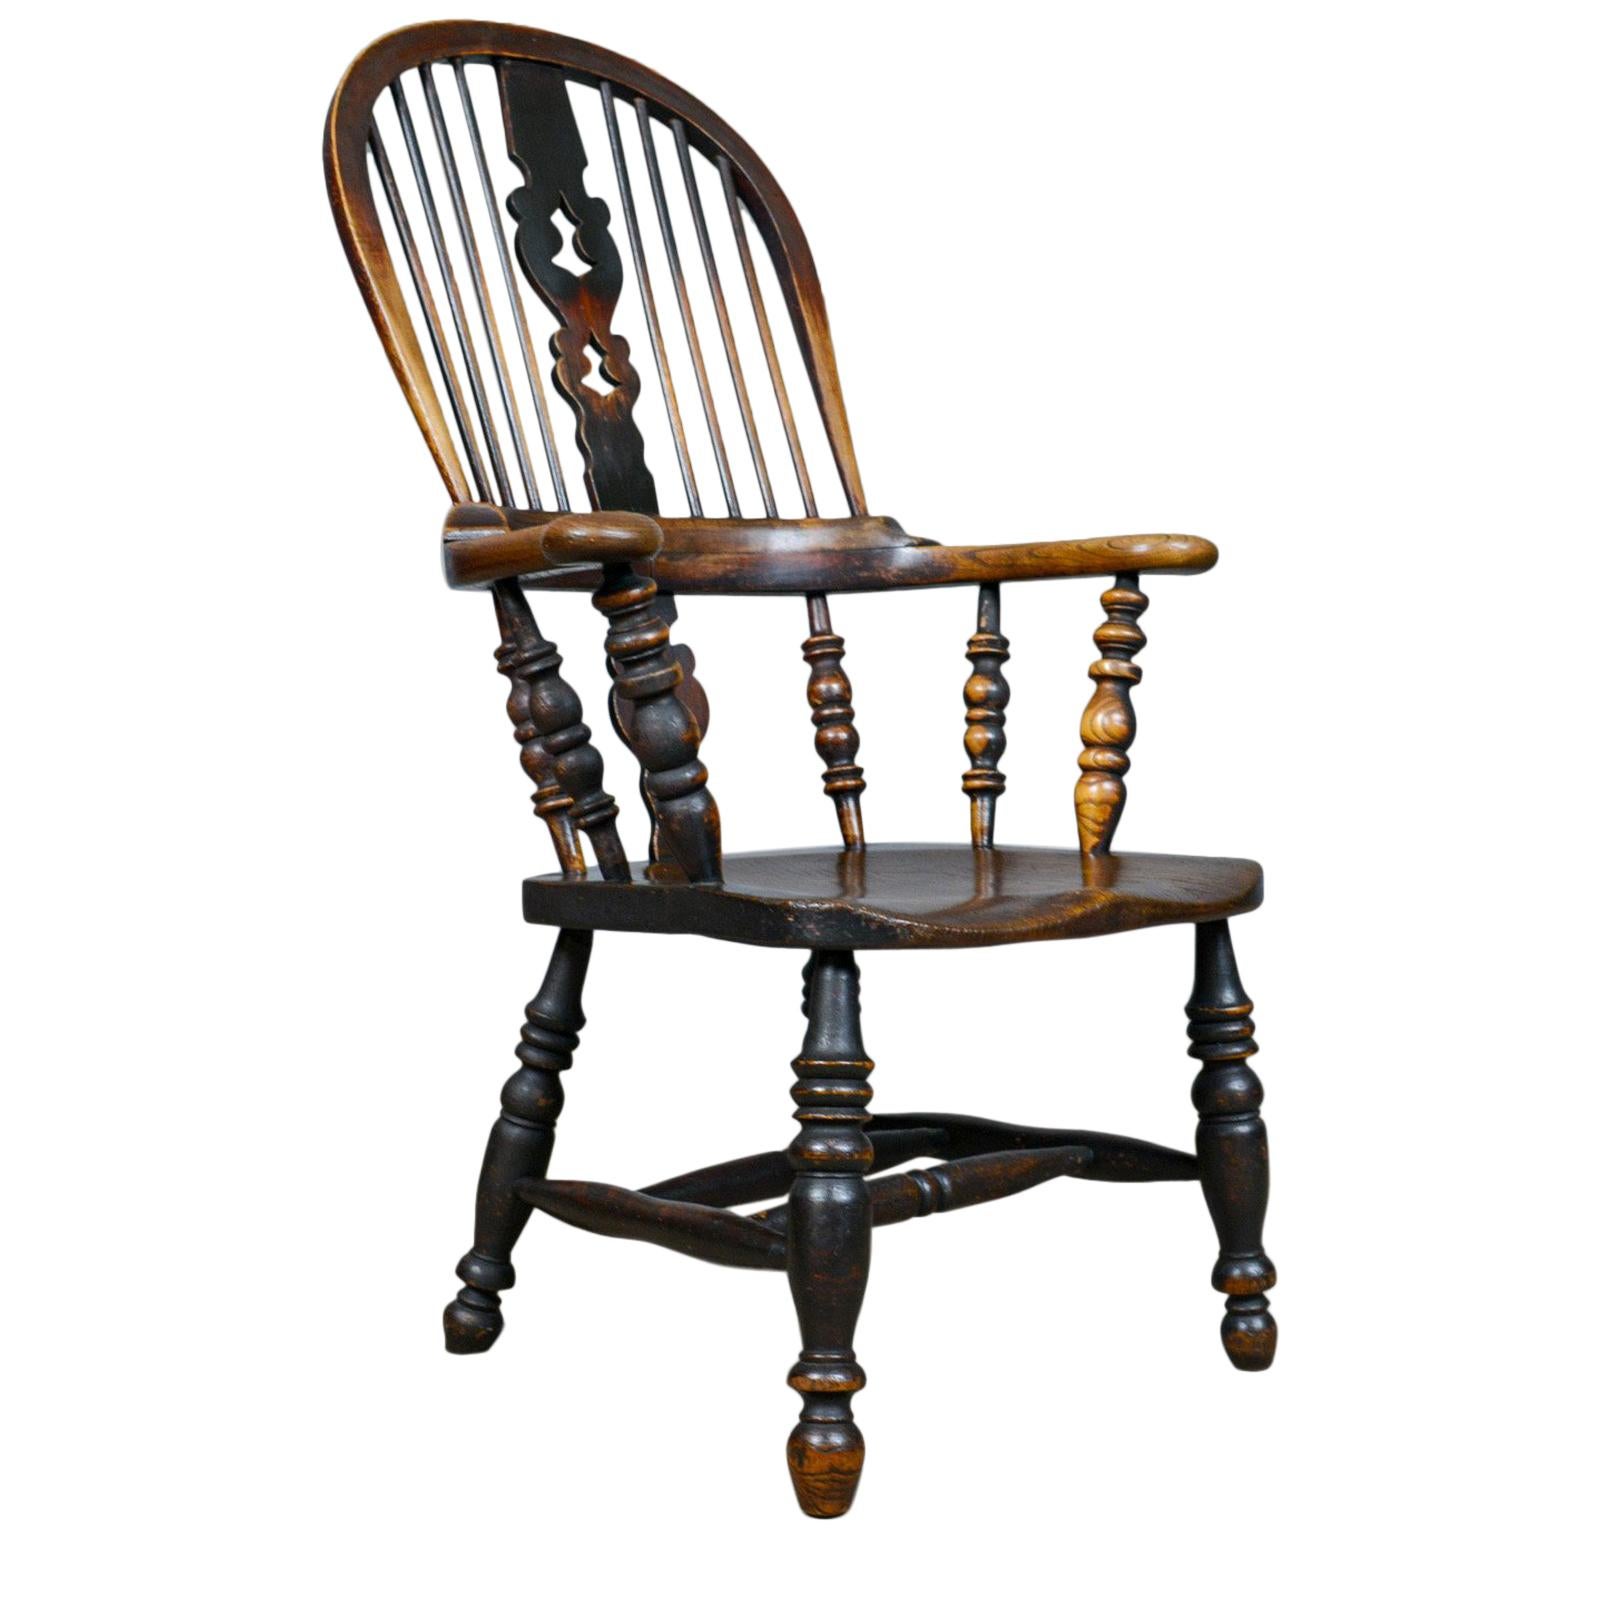 Antique Windsor Broad Arm Elbow Chair, English, Victorian, Elm, Ash, circa 1850